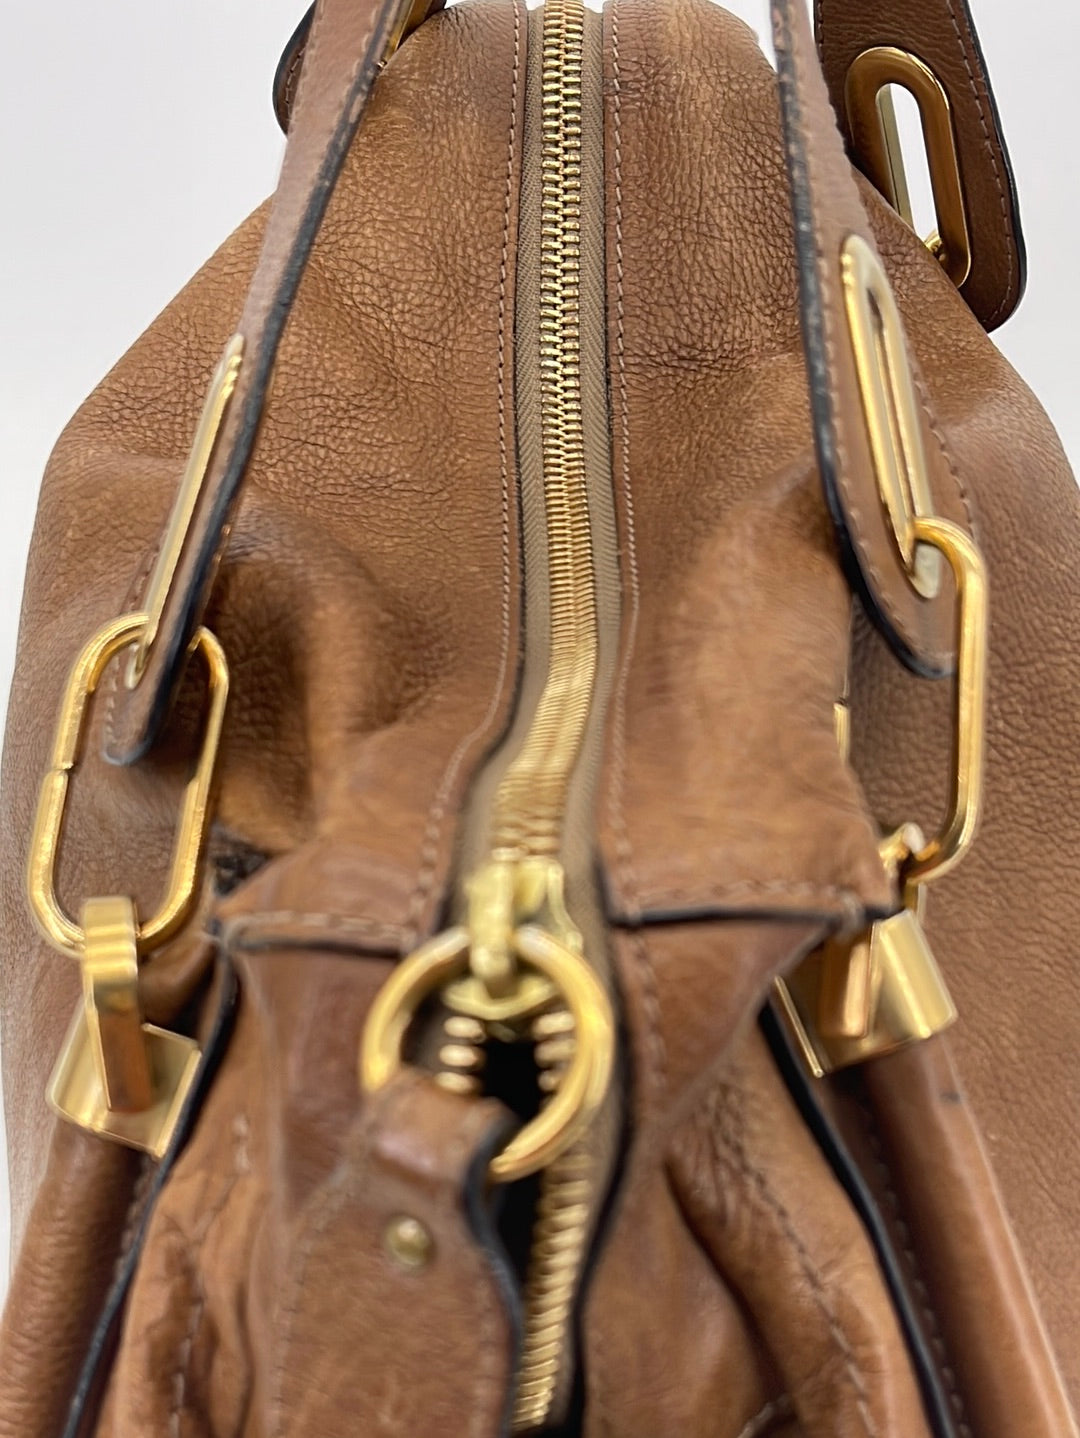 Preloved Chloe Large Brown Leather 2 Way Paraty Shoulder Hand Bag 3095624 052322 $400 OFF DEAL